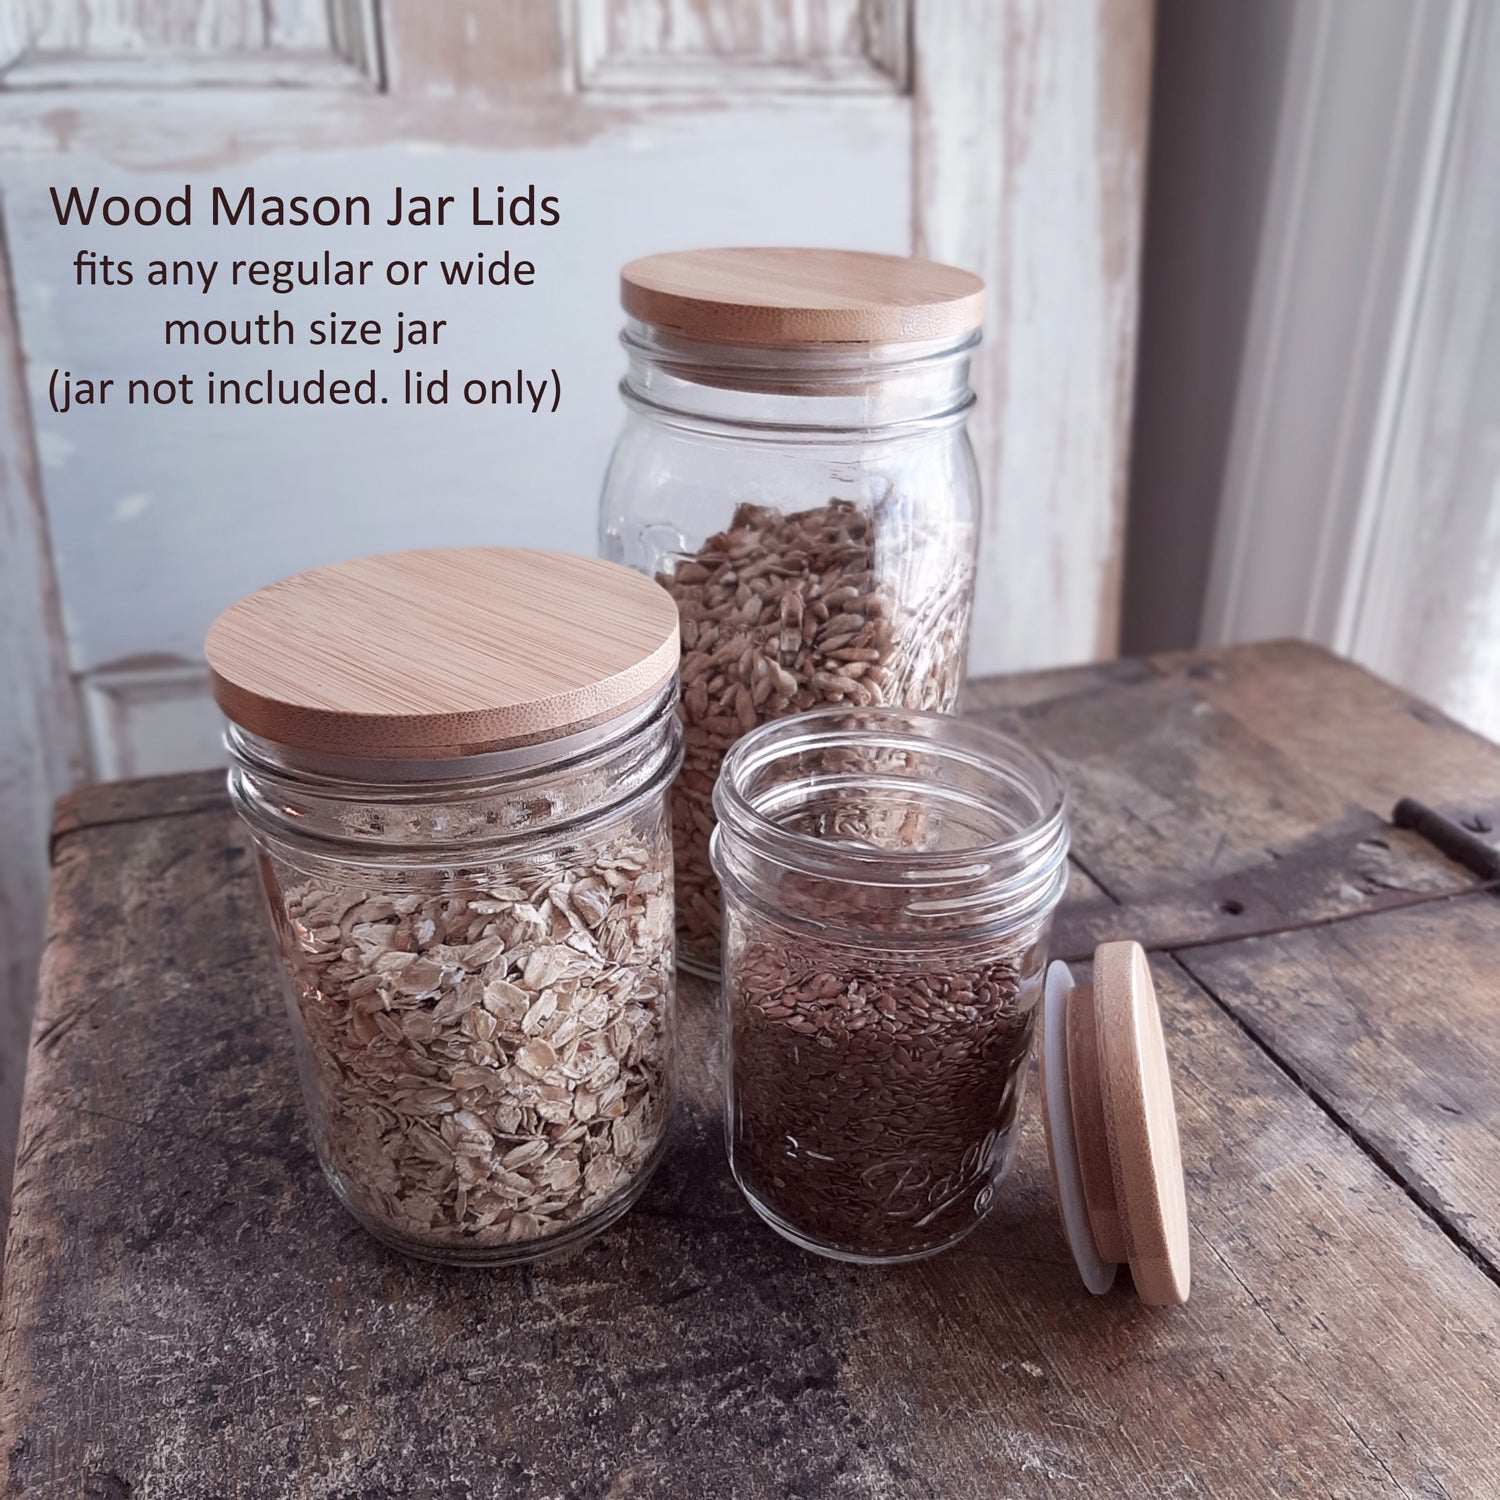 Wood Mason Jar Lids [2]